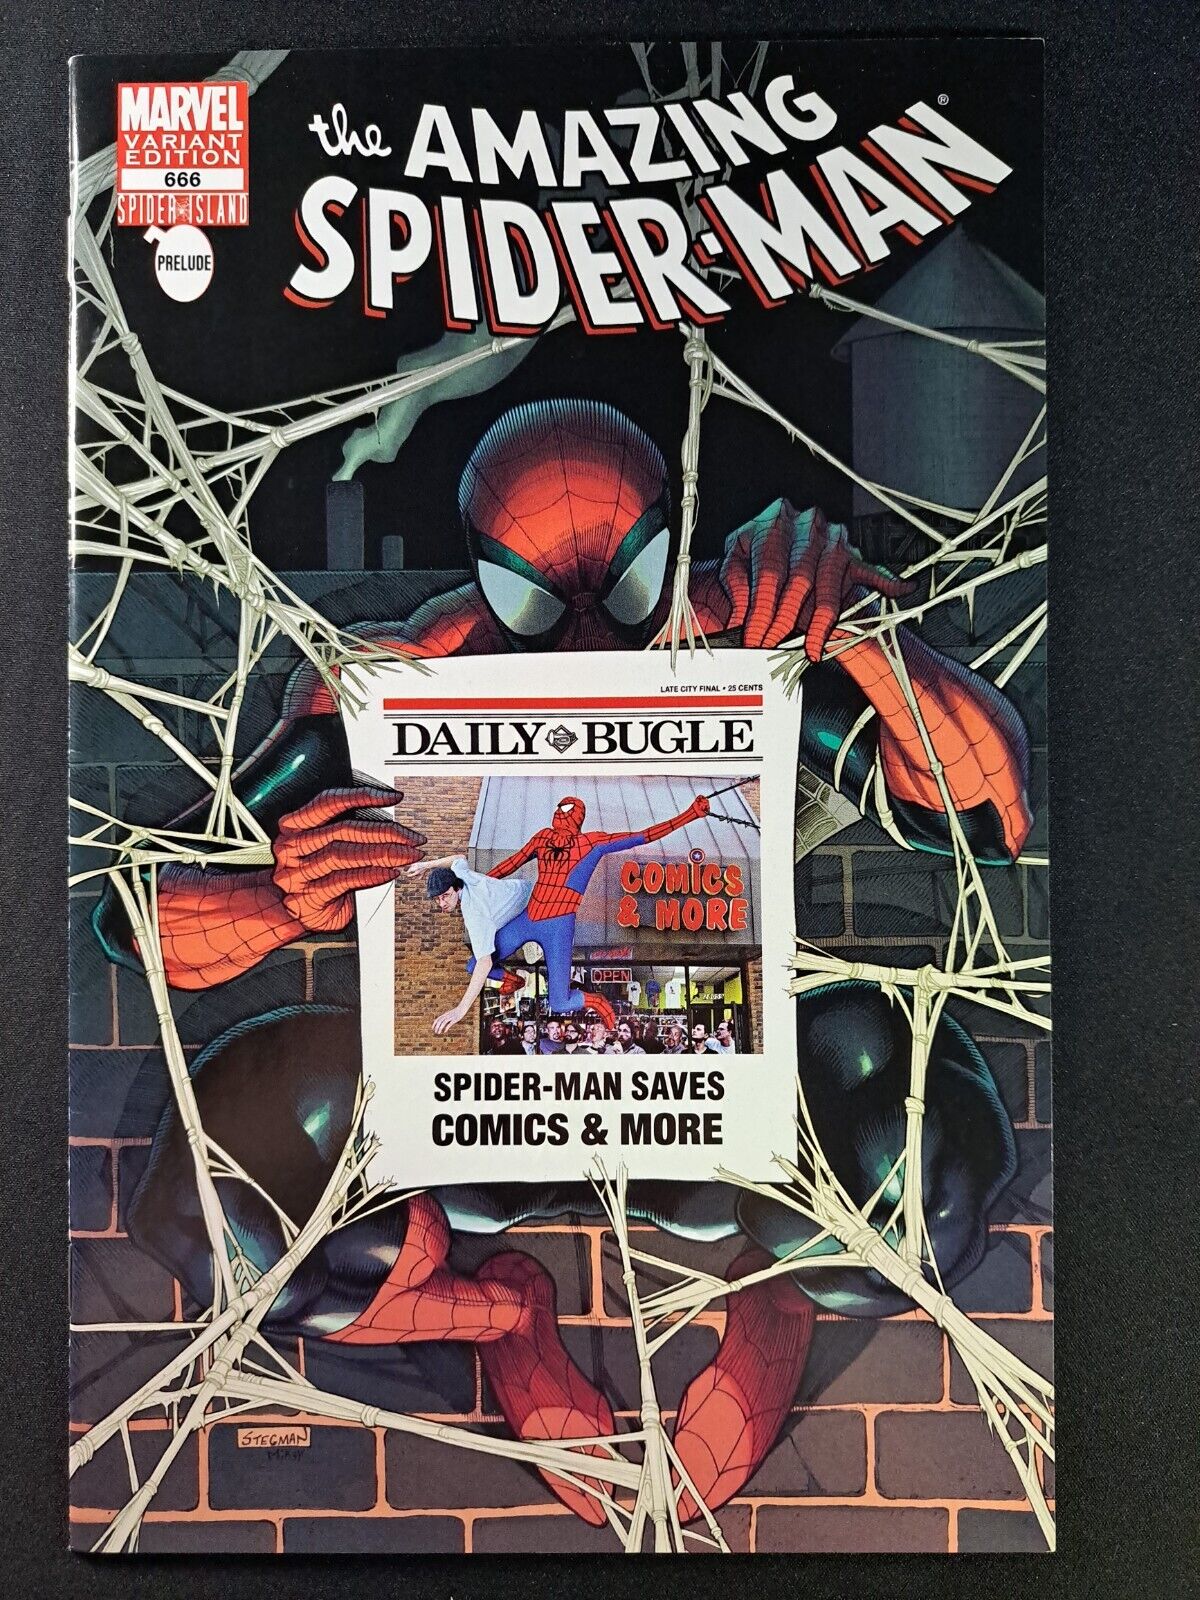 Amazing Spider-Man #666 Spider-Man Saves Comics & More Store Variant - 10 Pics